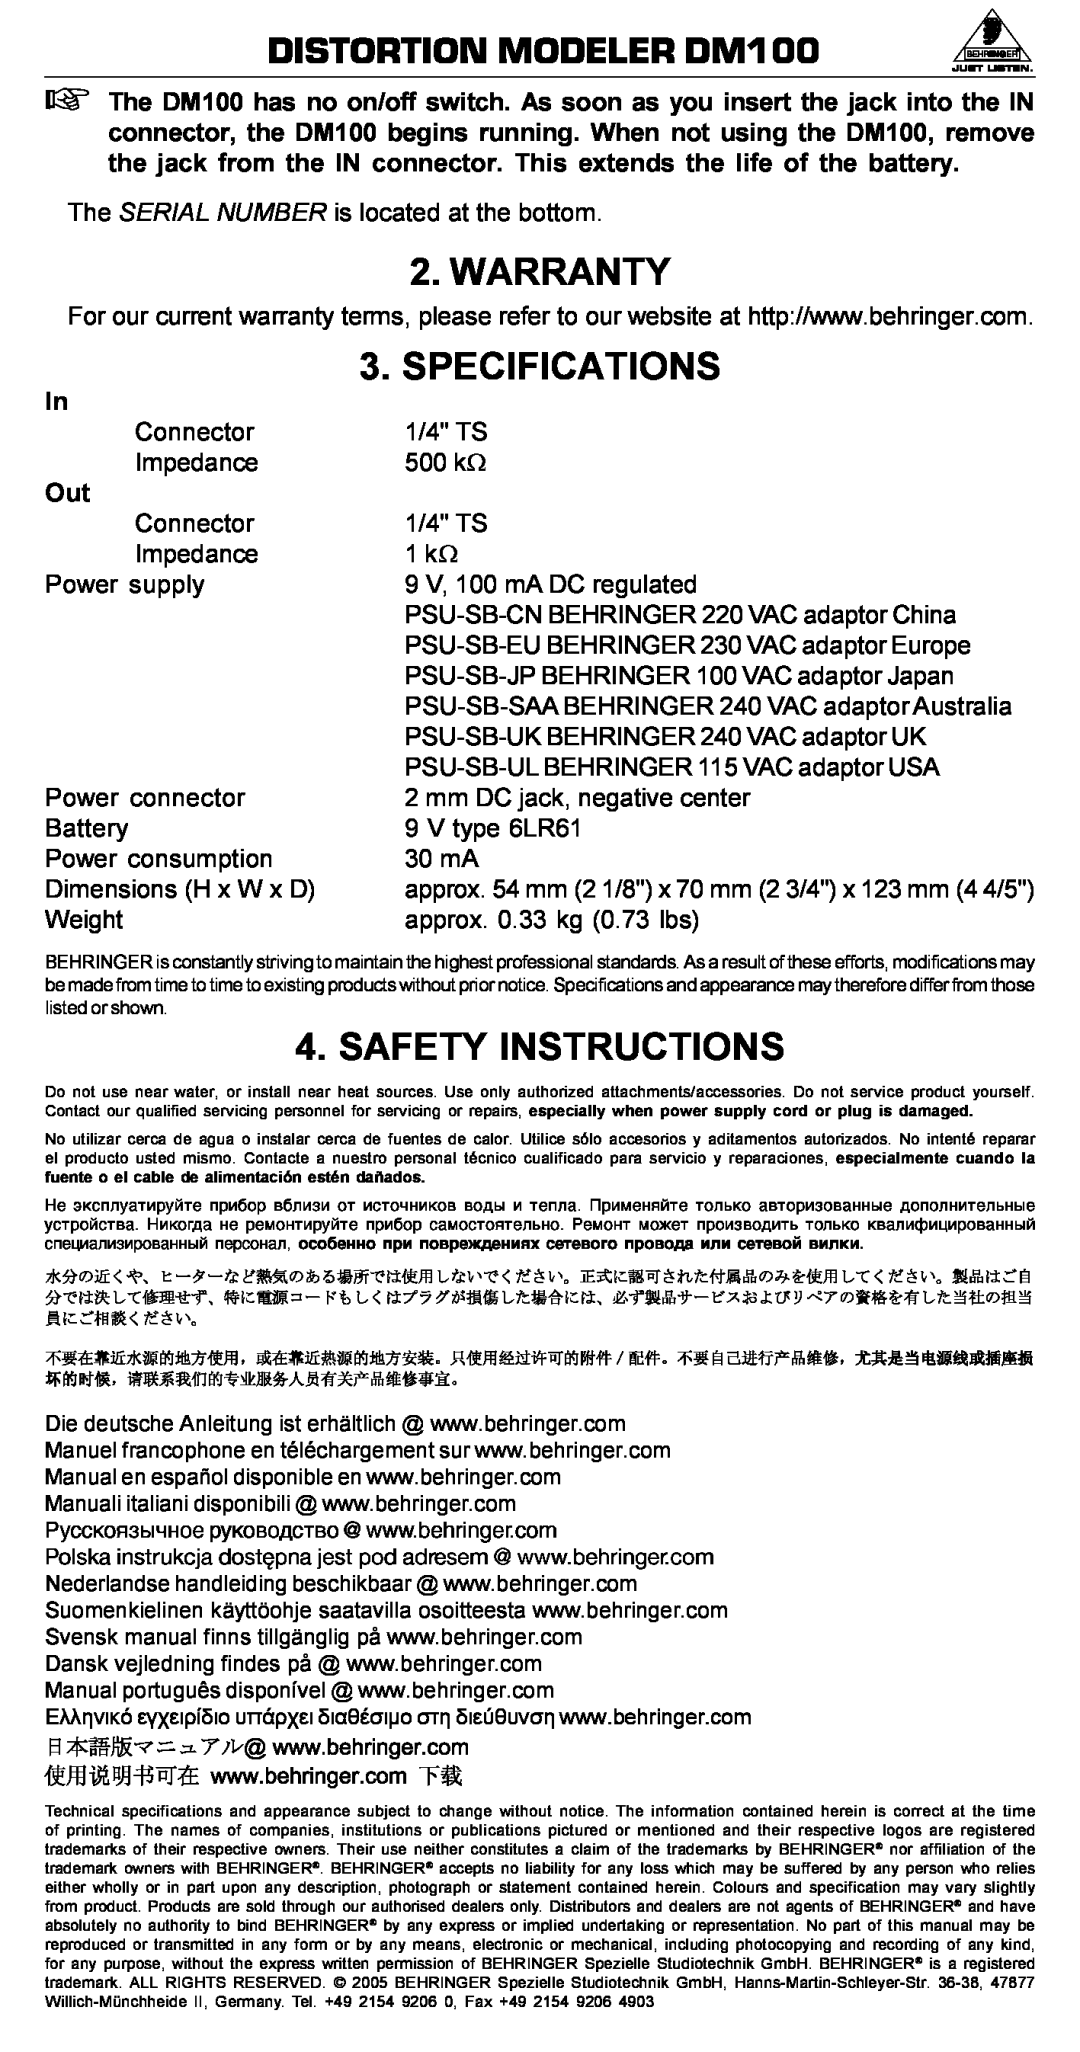 Behringer DM100 manual Warranty, Specifications, Safety Instructions, fuente o el cabledealimentaciónestén dañados 